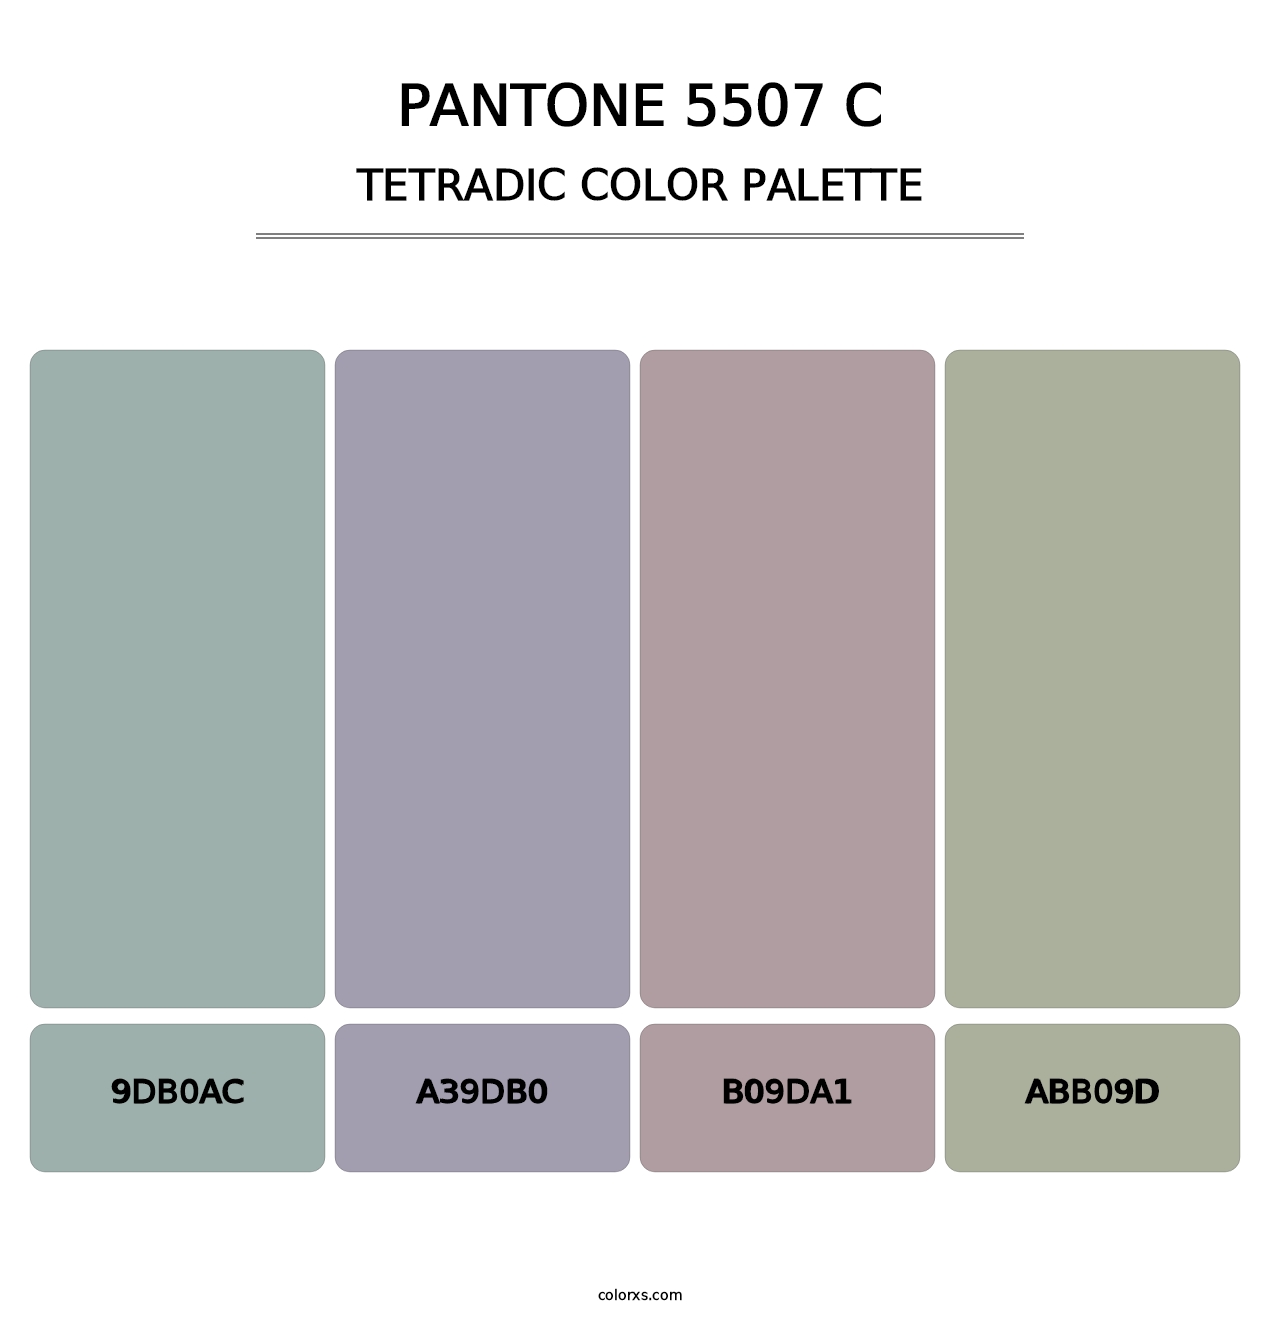 PANTONE 5507 C - Tetradic Color Palette